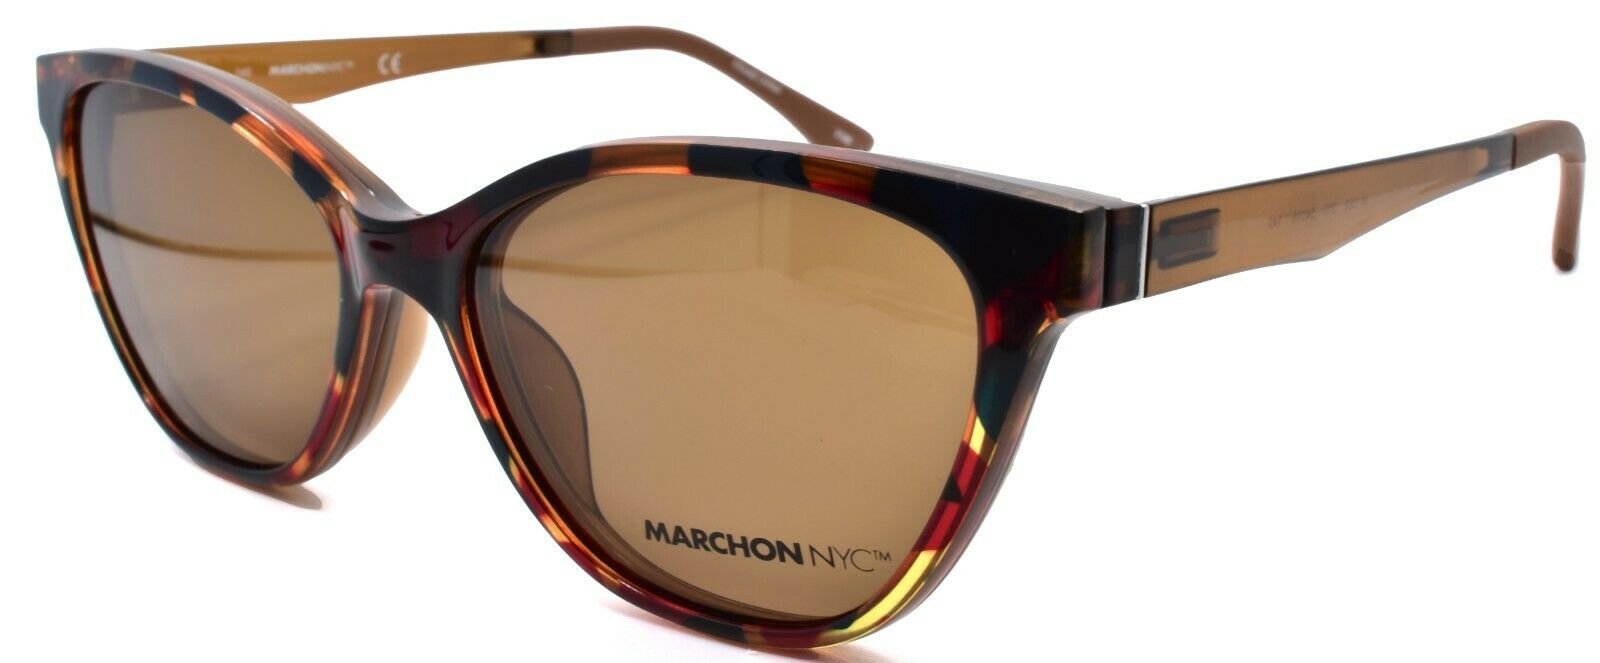 1-Marchon M-1500 210 Women's Eyeglasses 54-15-140 Brown + 2 Magnetic Clip Ons-886895485845-IKSpecs